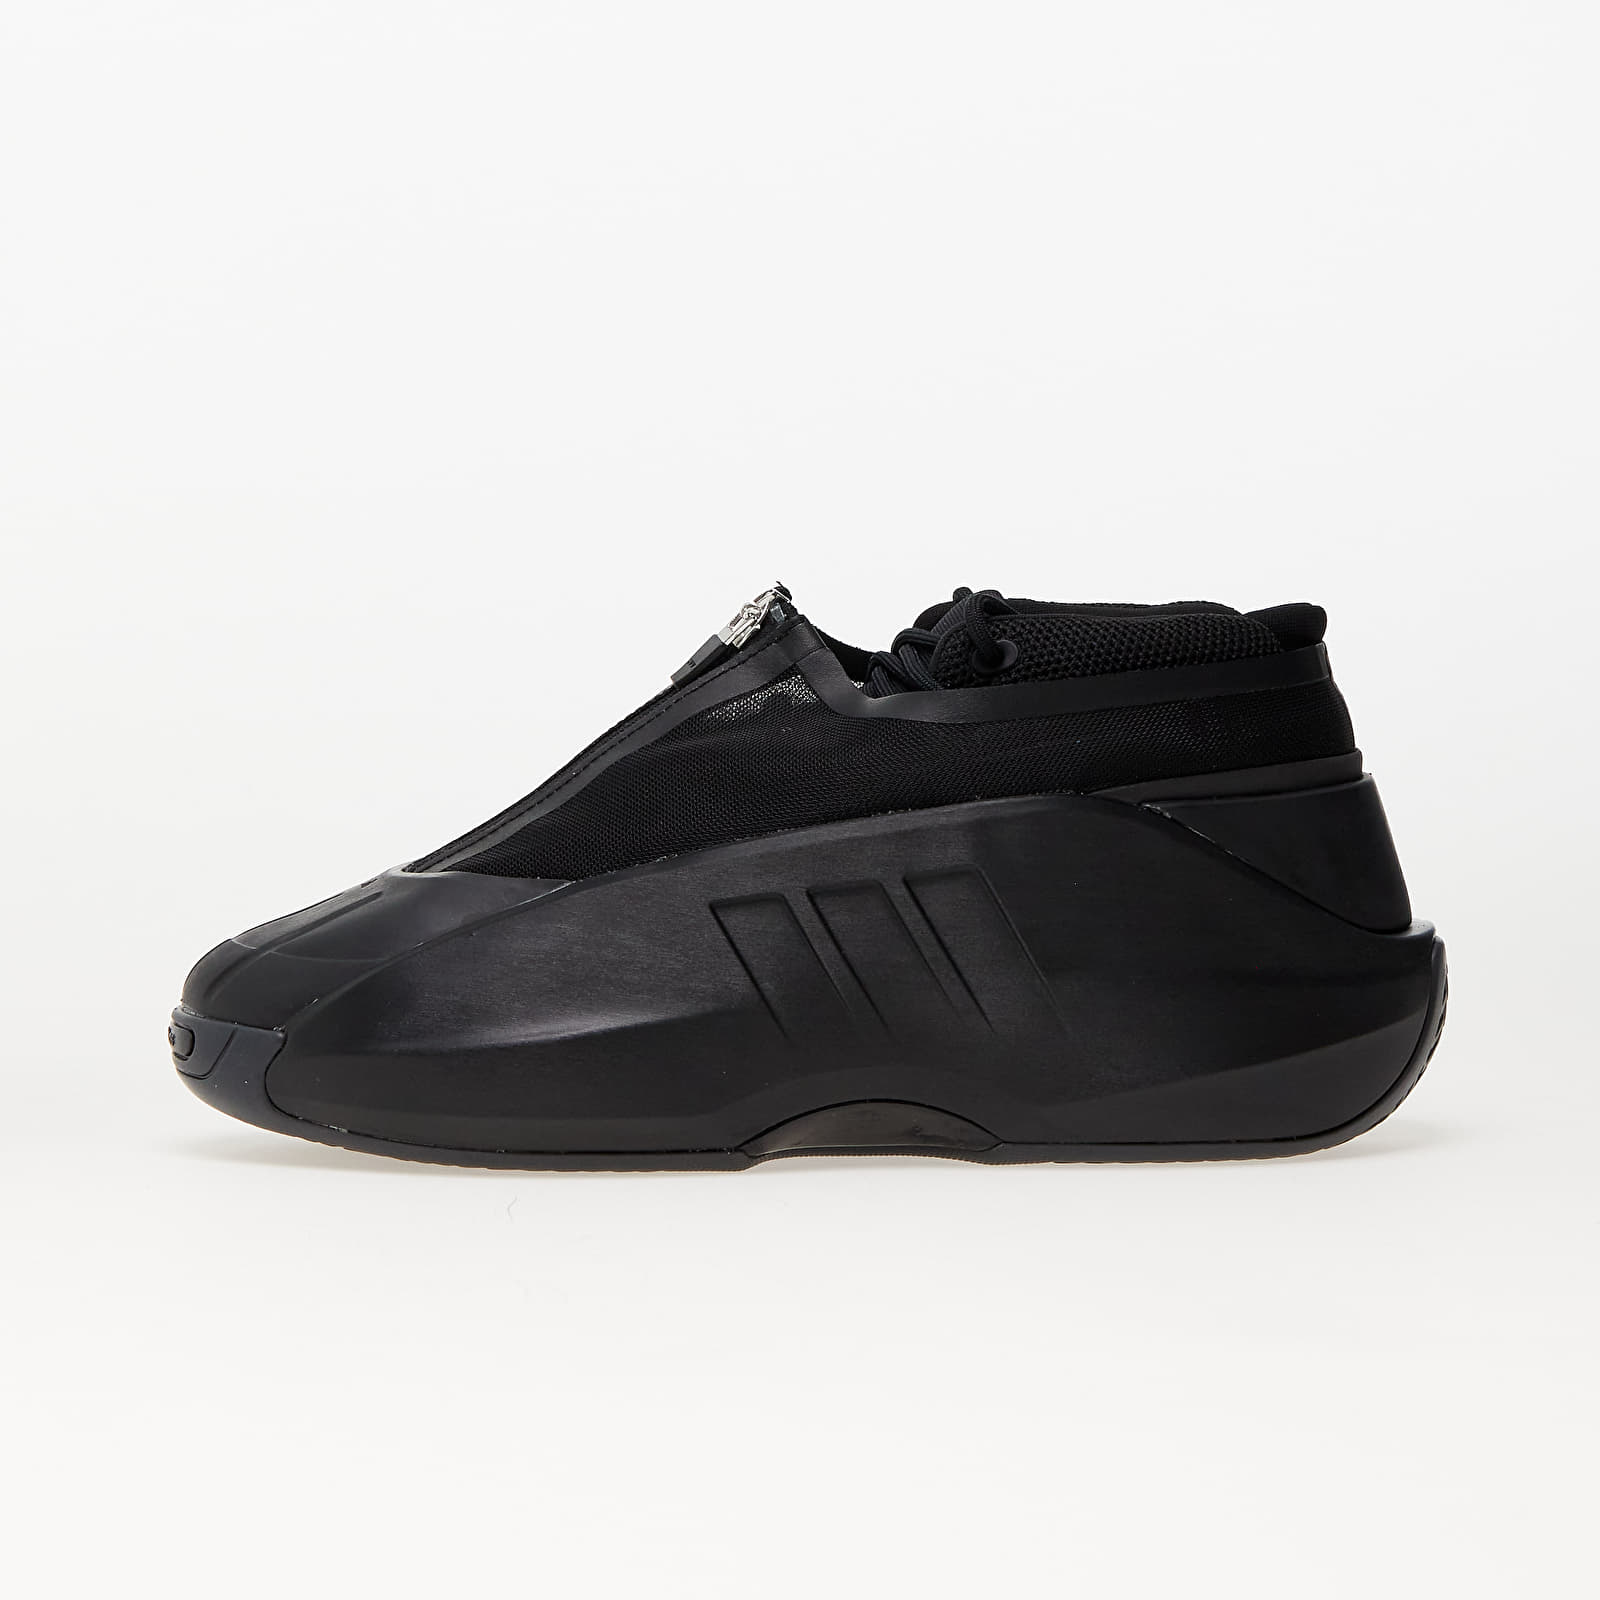 Men's shoes adidas Crazy IIInfinity Core Black/ Carbon/ Ftw White